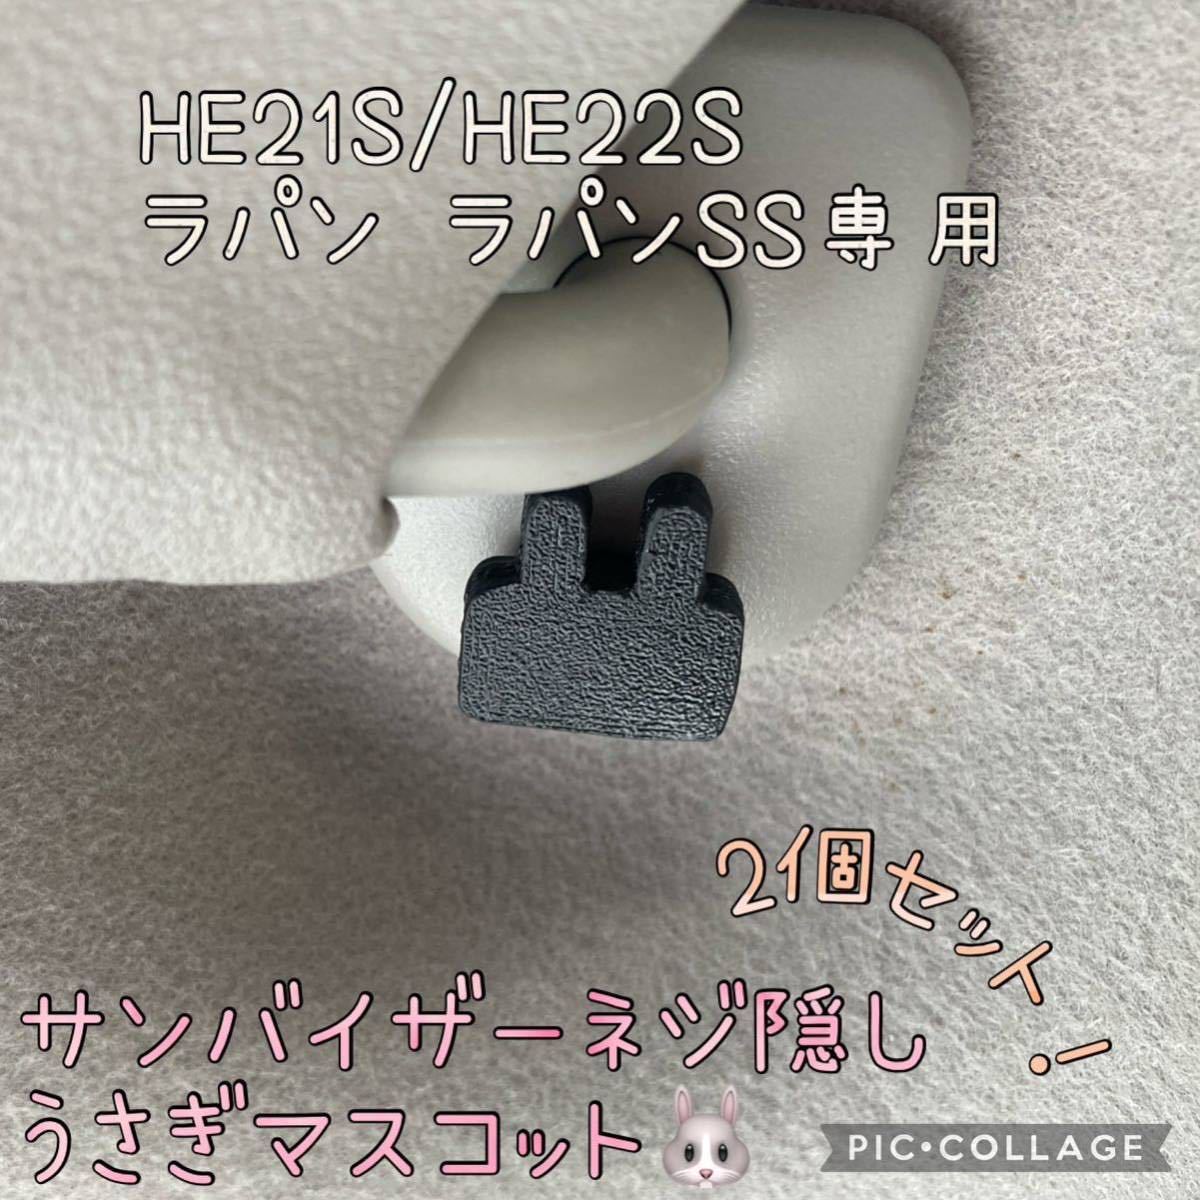 HE21S/HE22Sラパン ラパンSS専用サンバイザーネジ隠しうさぎマスコット左右セットhidden rabbit ver2. c